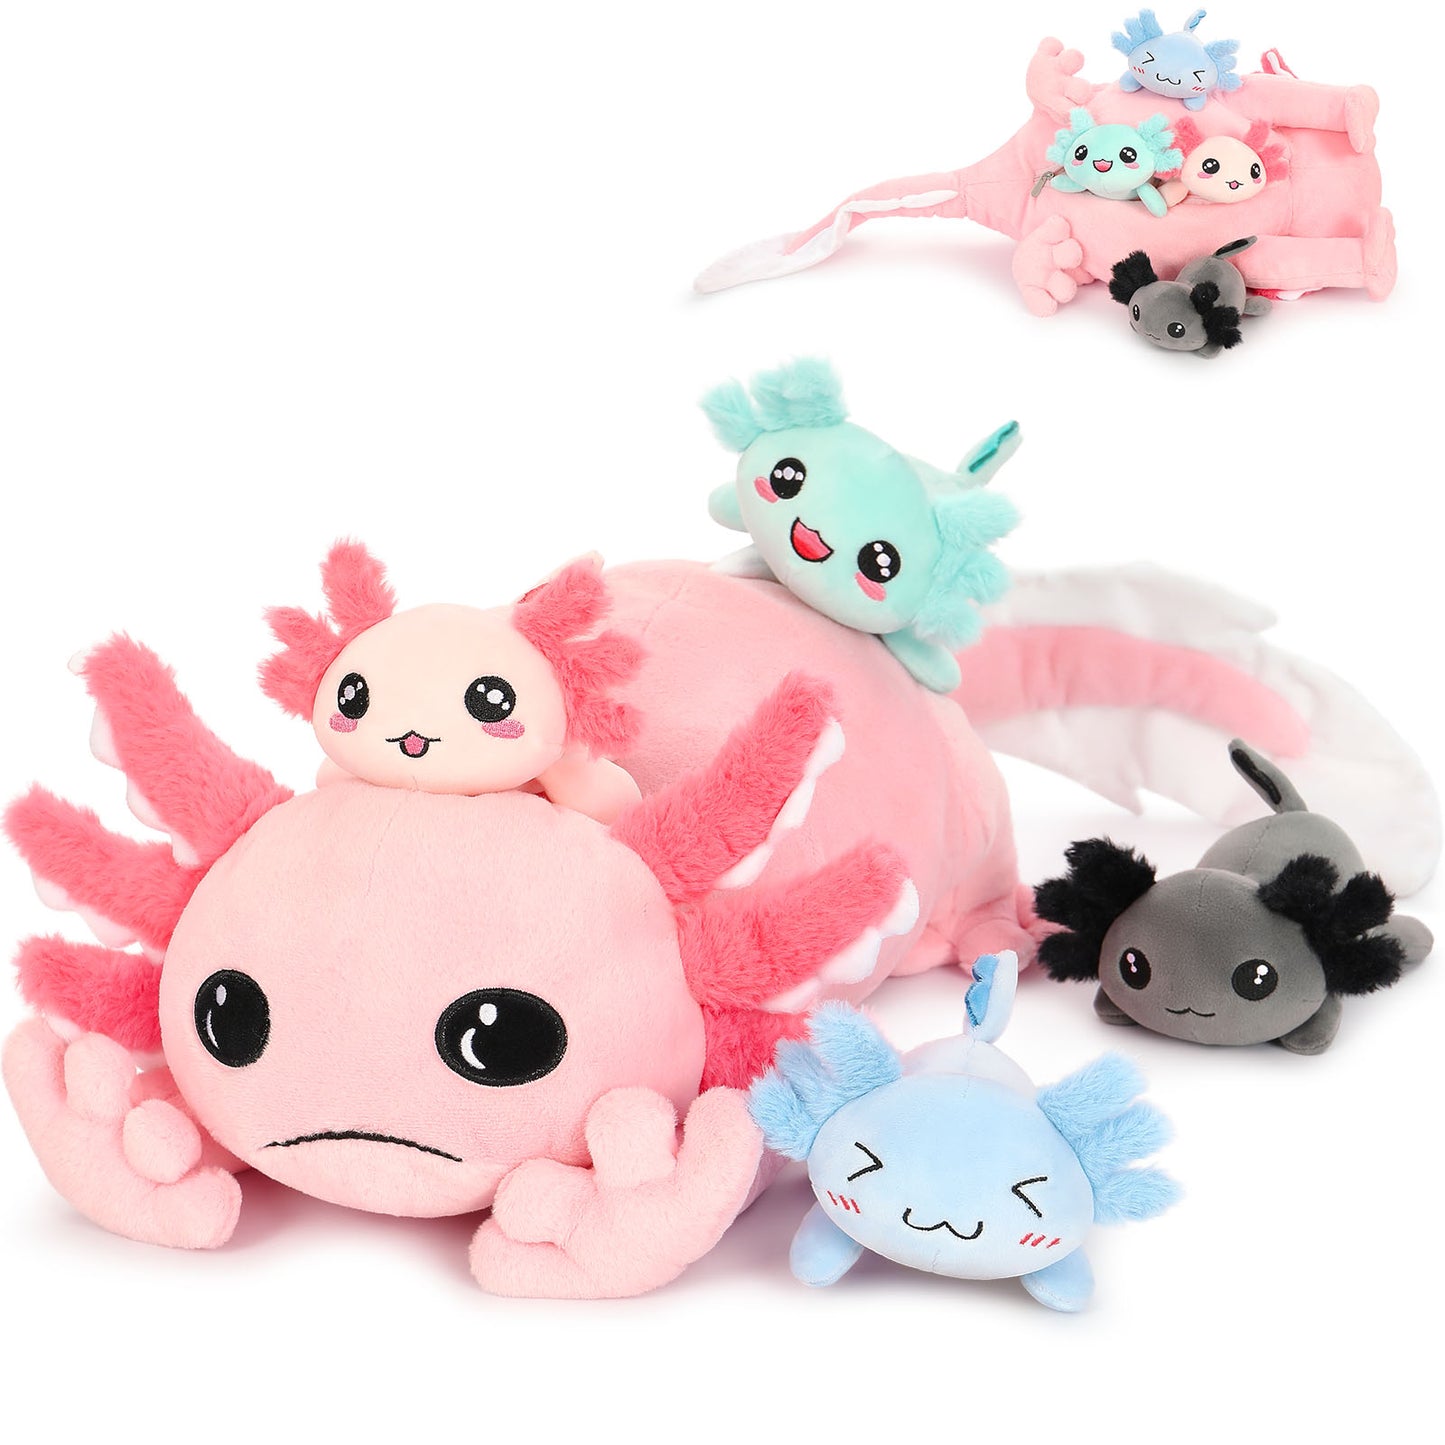 Axolotl Stuffed Animals Salamander Plush Toys, Pink, 31 Inches - MorisMos Stuffed Animals - Free Shipping